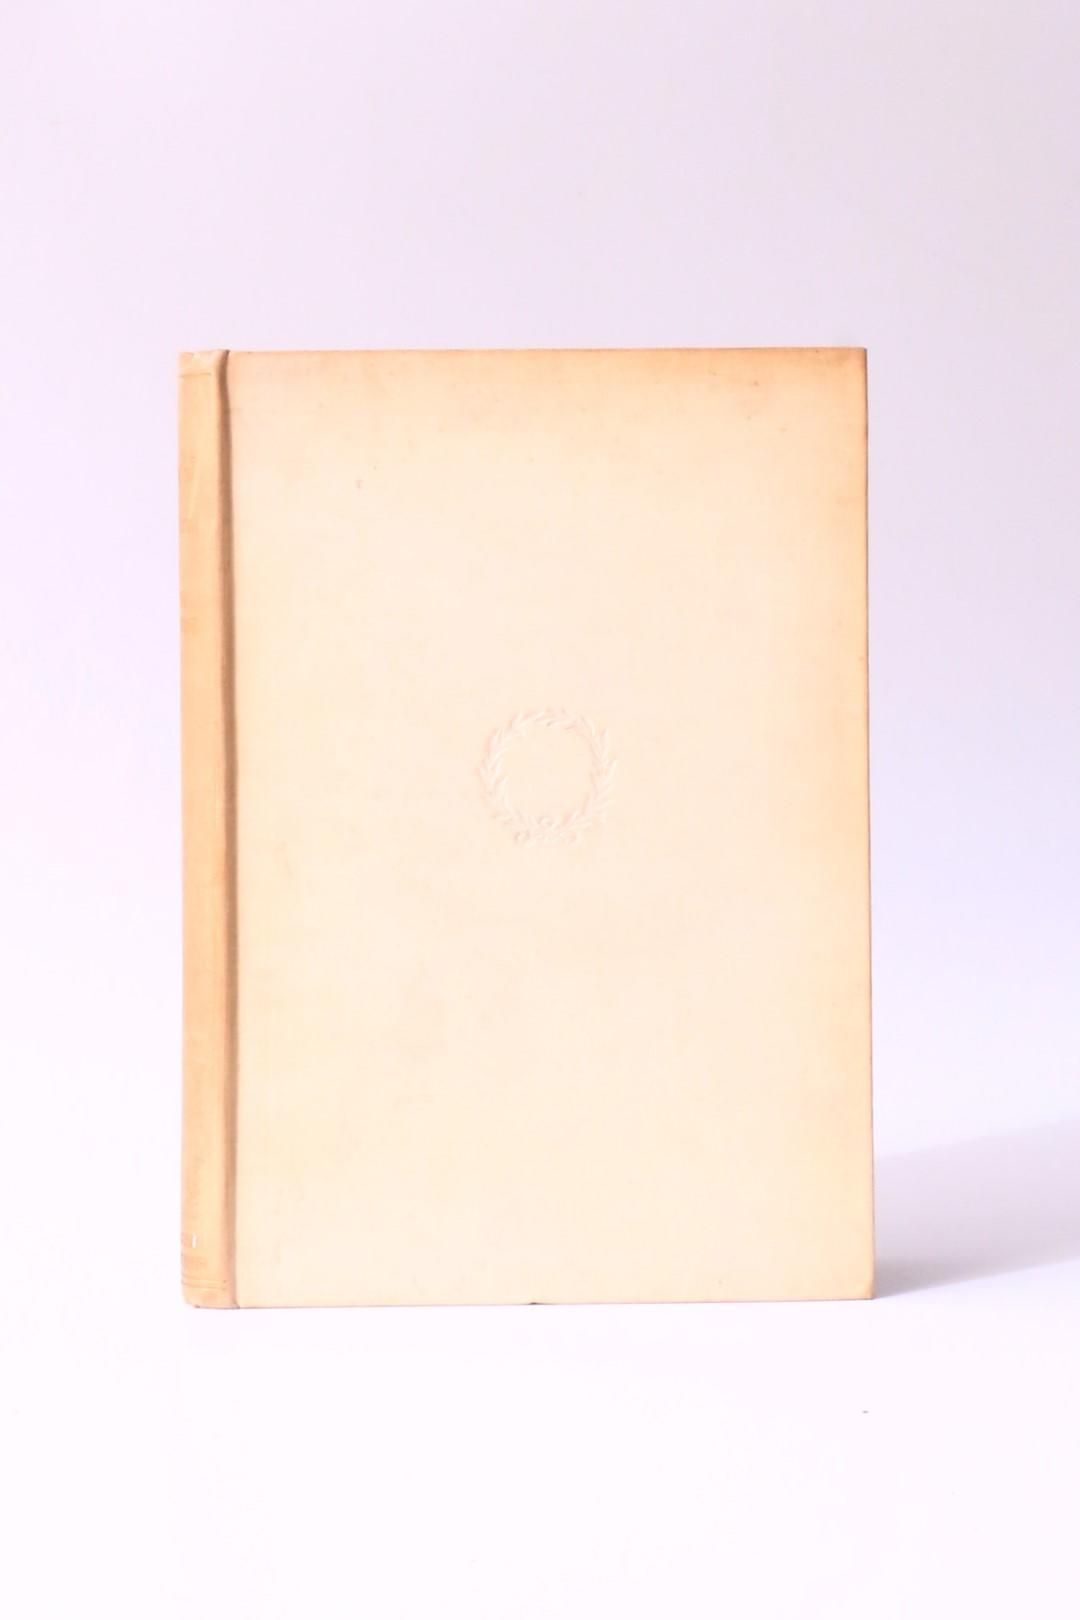 W. Hugh Higginbottom - King of Kulturia - Walter Scott Publishing, 1915, First Edition.